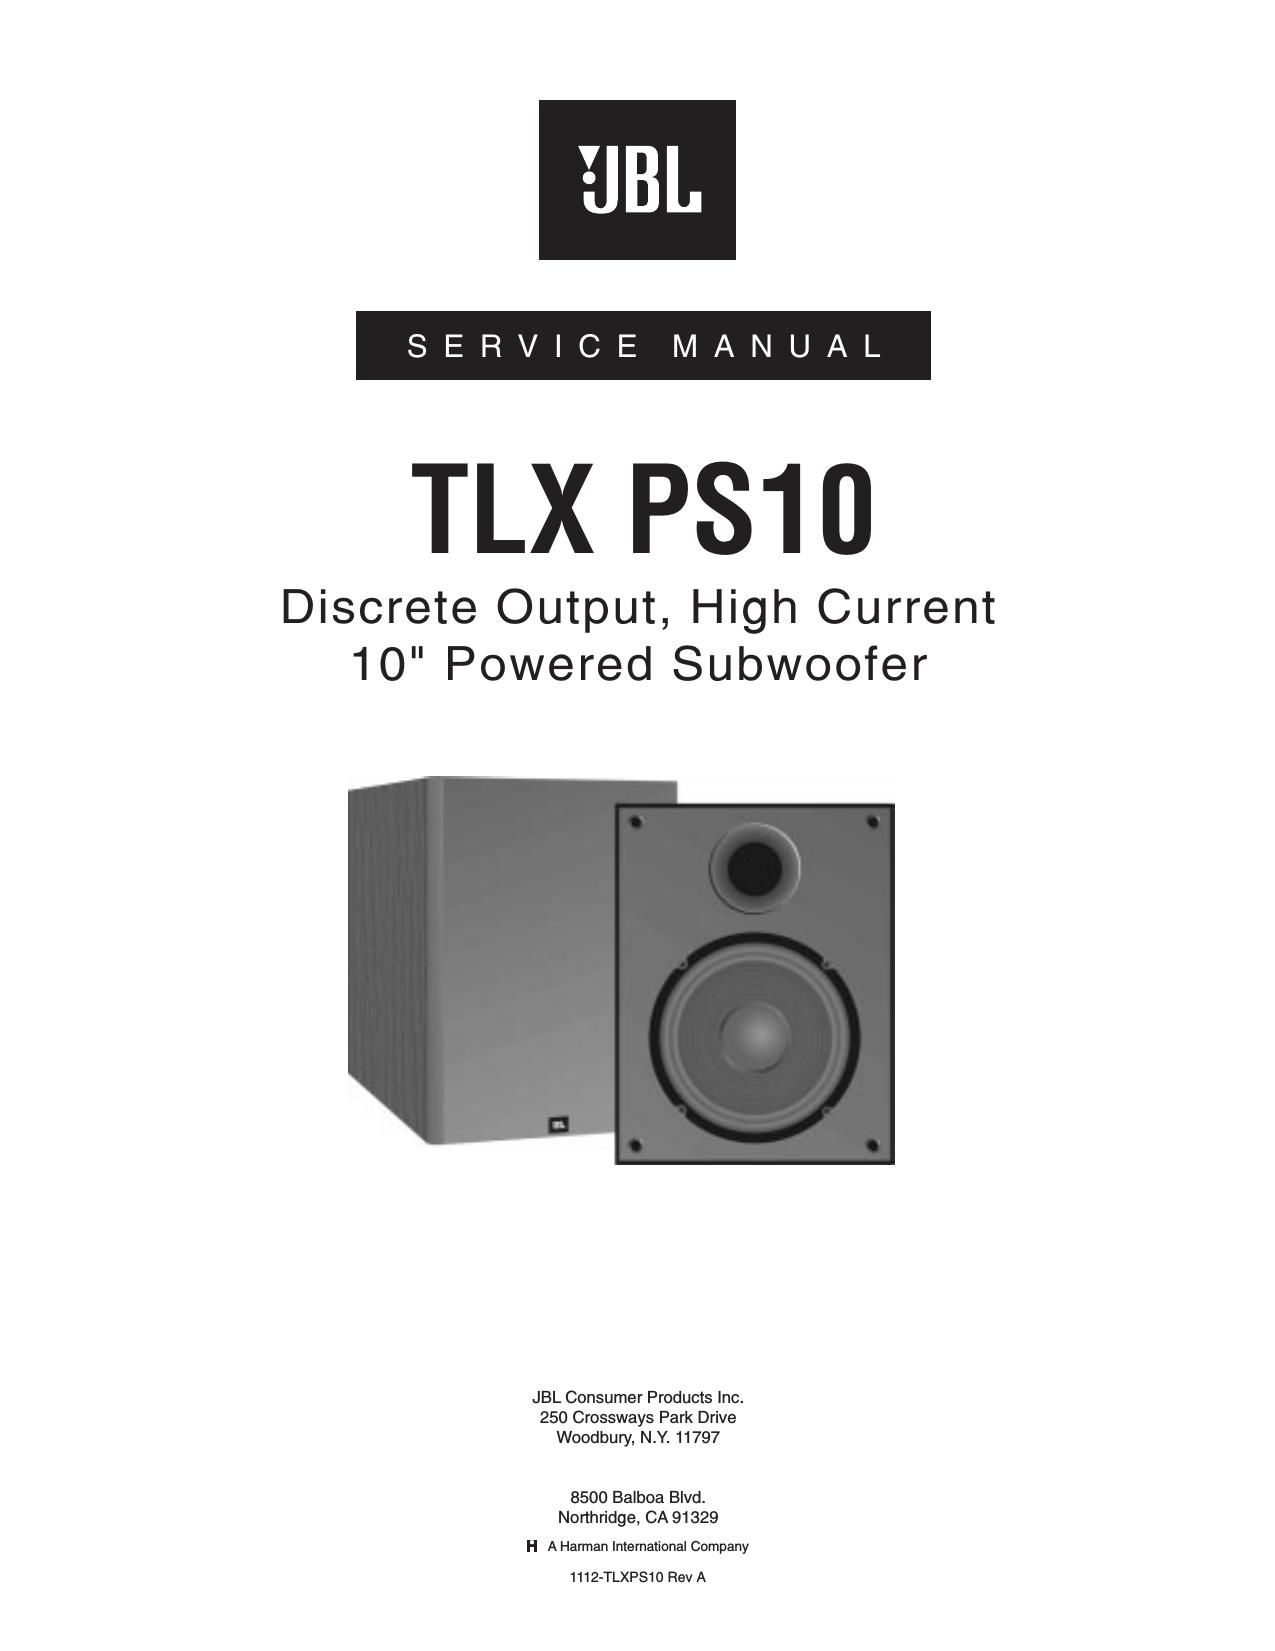 JBL TLX PS 10 service manual